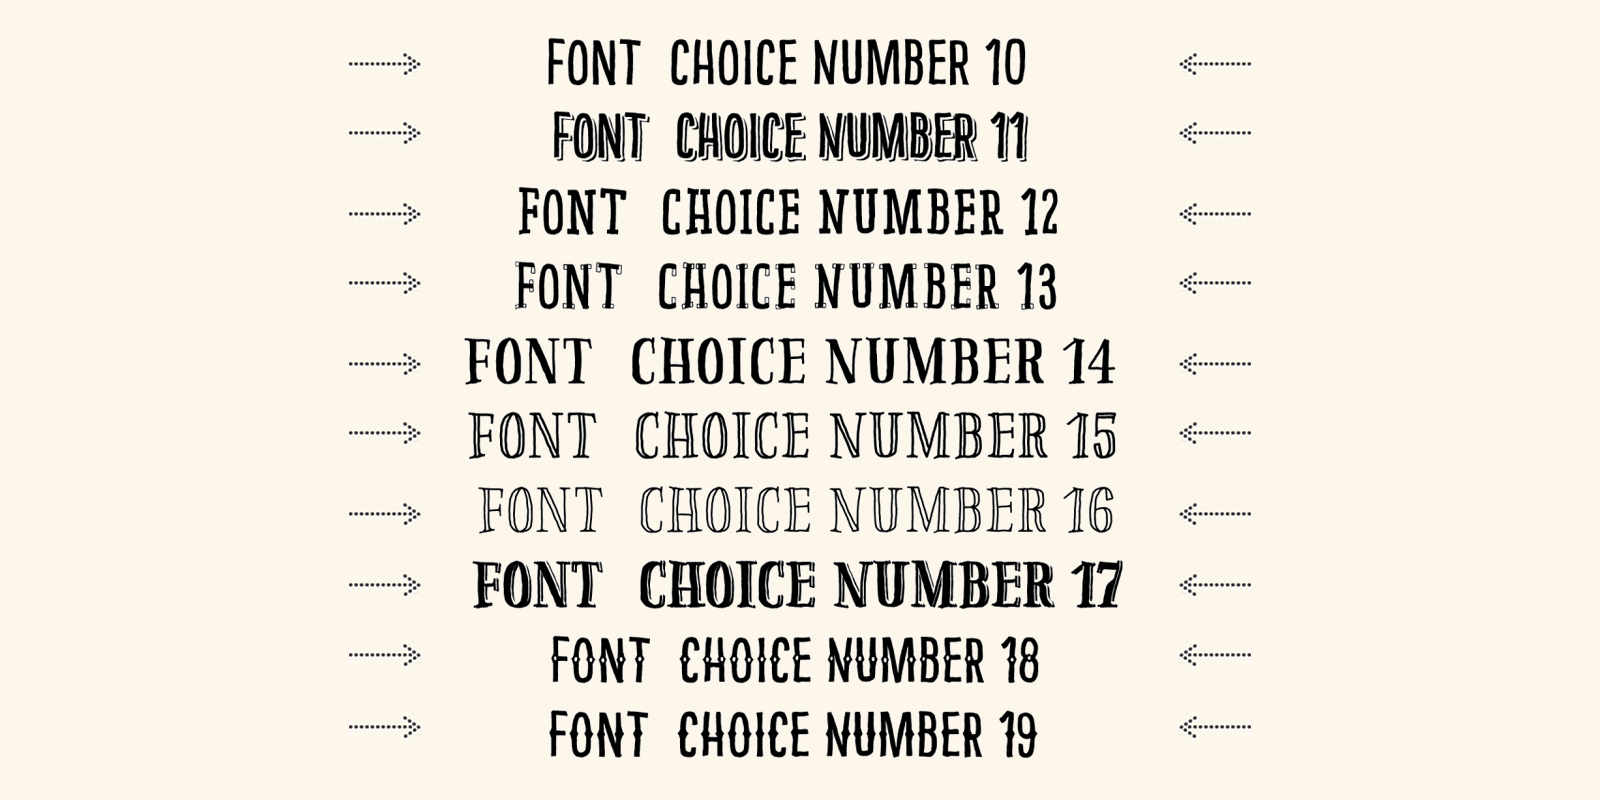 Font Choice - Typographic Error